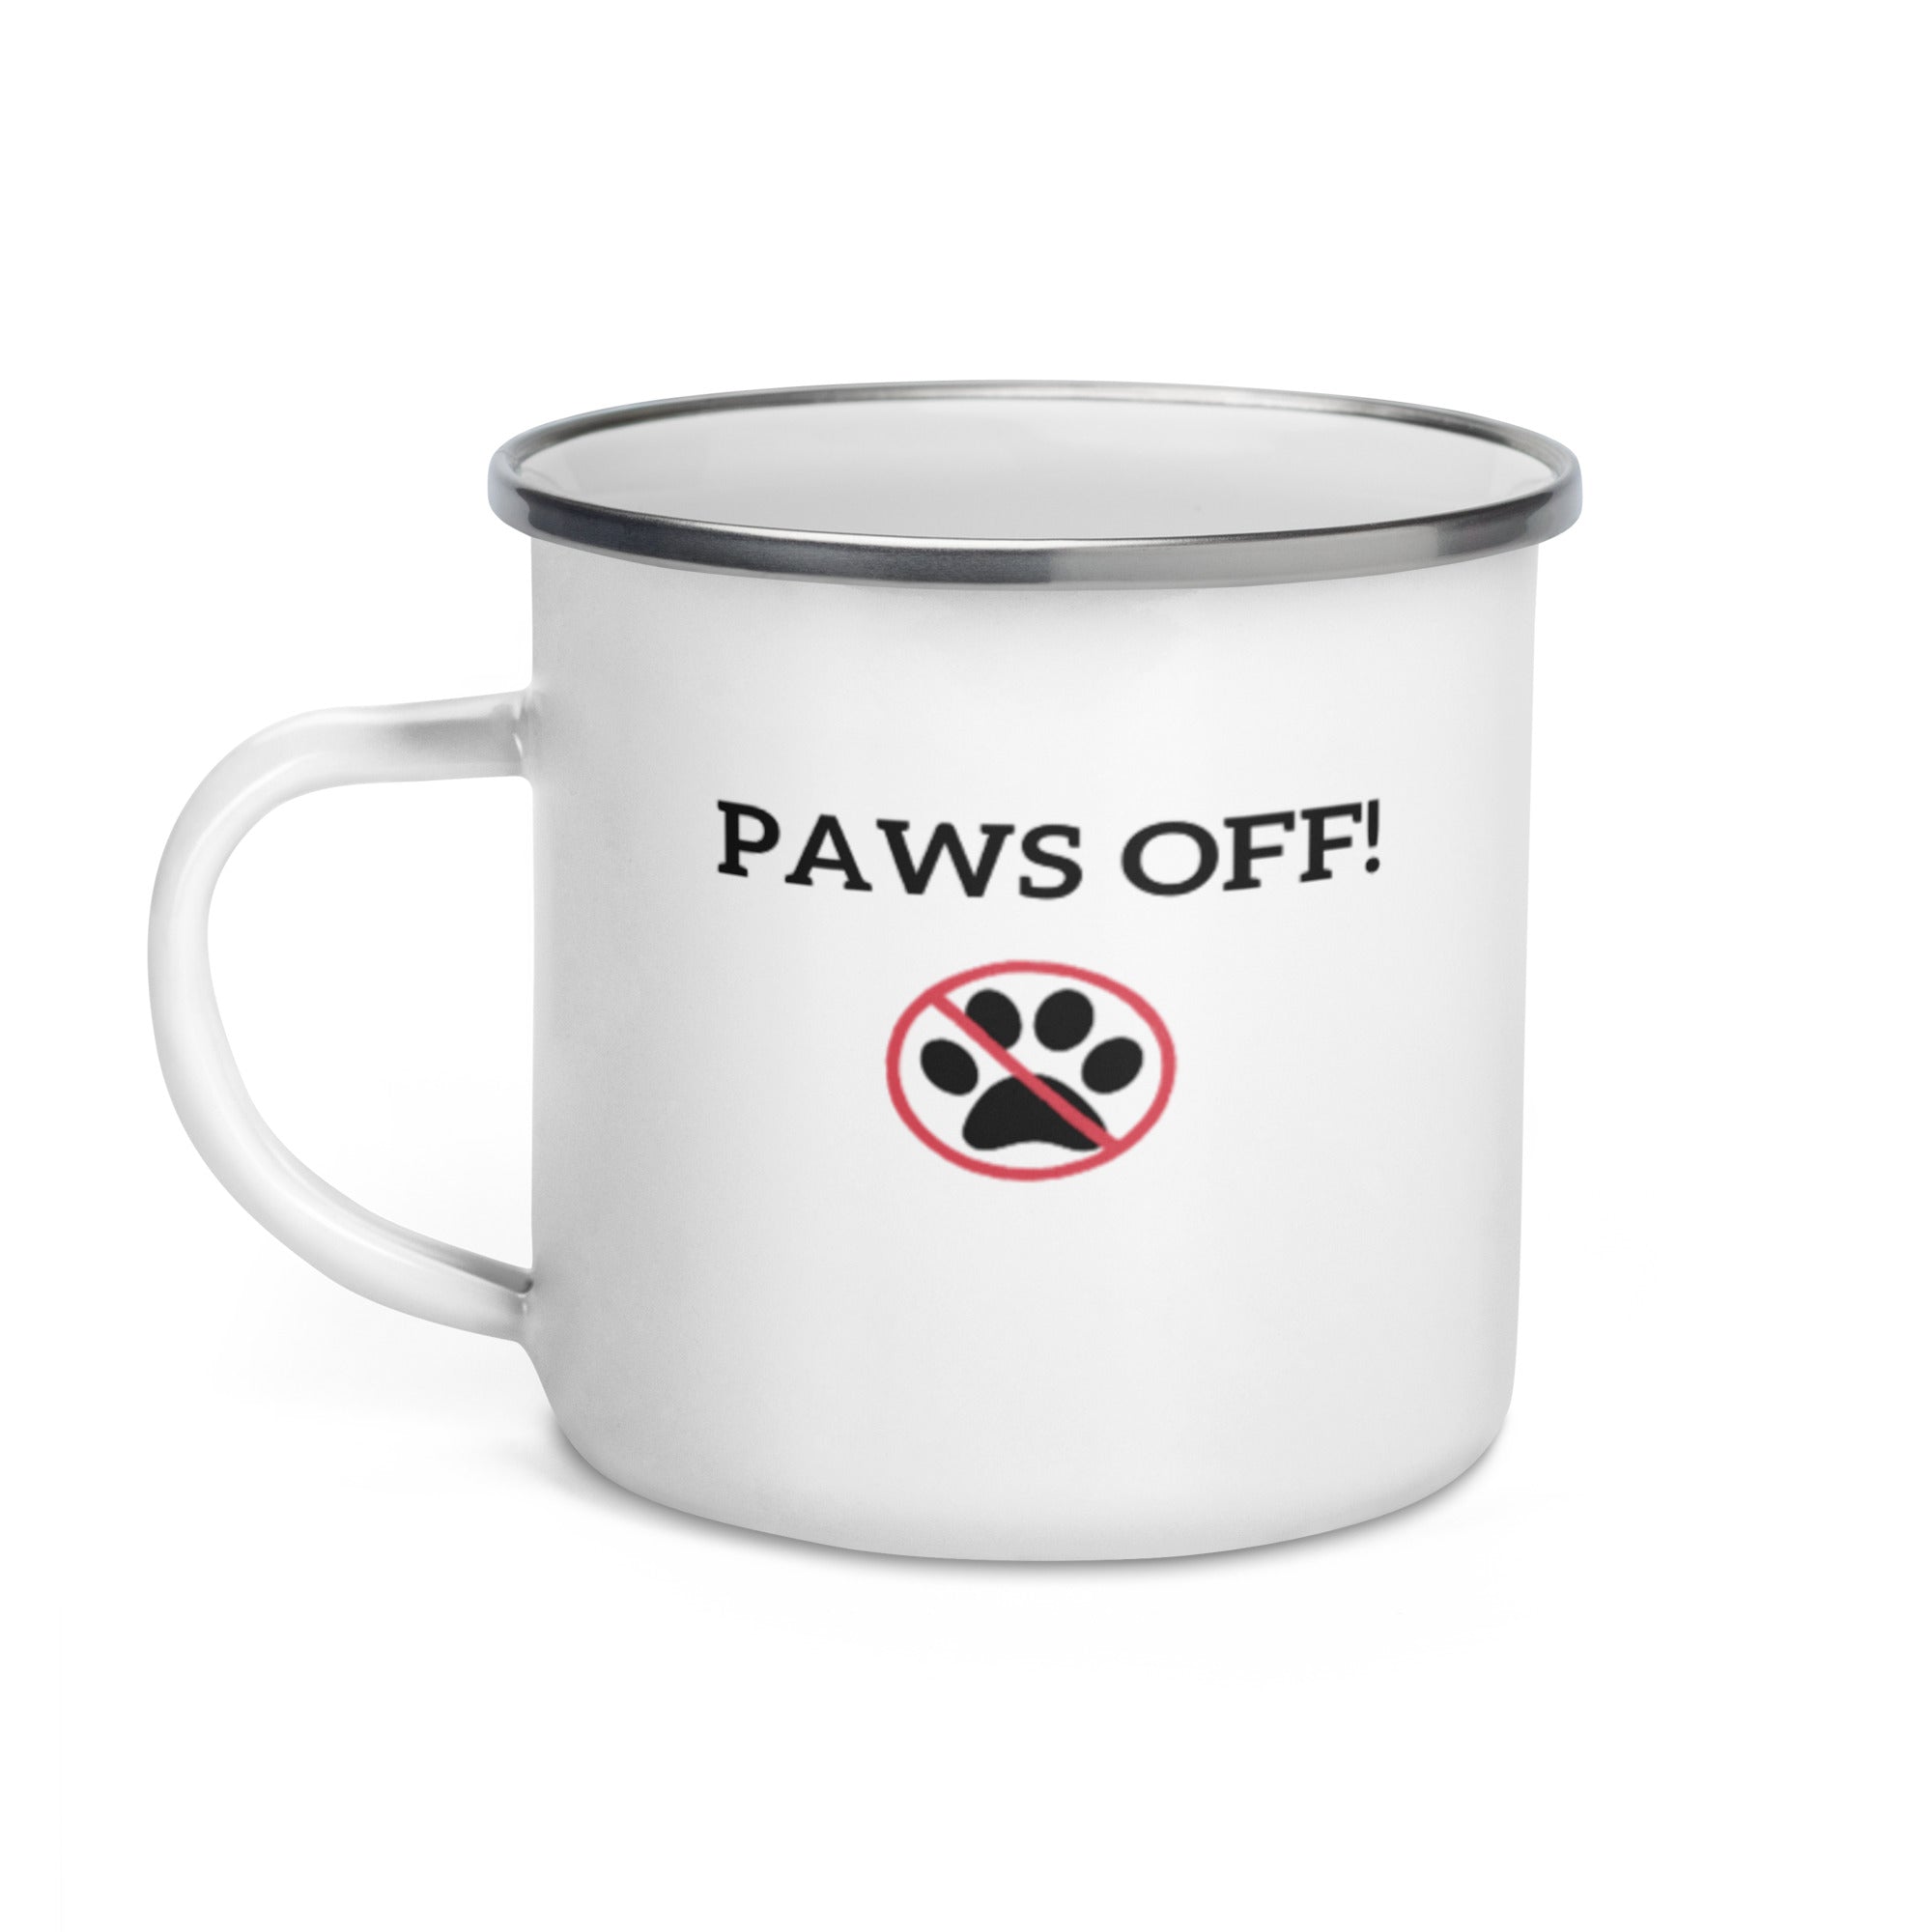 "Paws Off" Enamel Mug